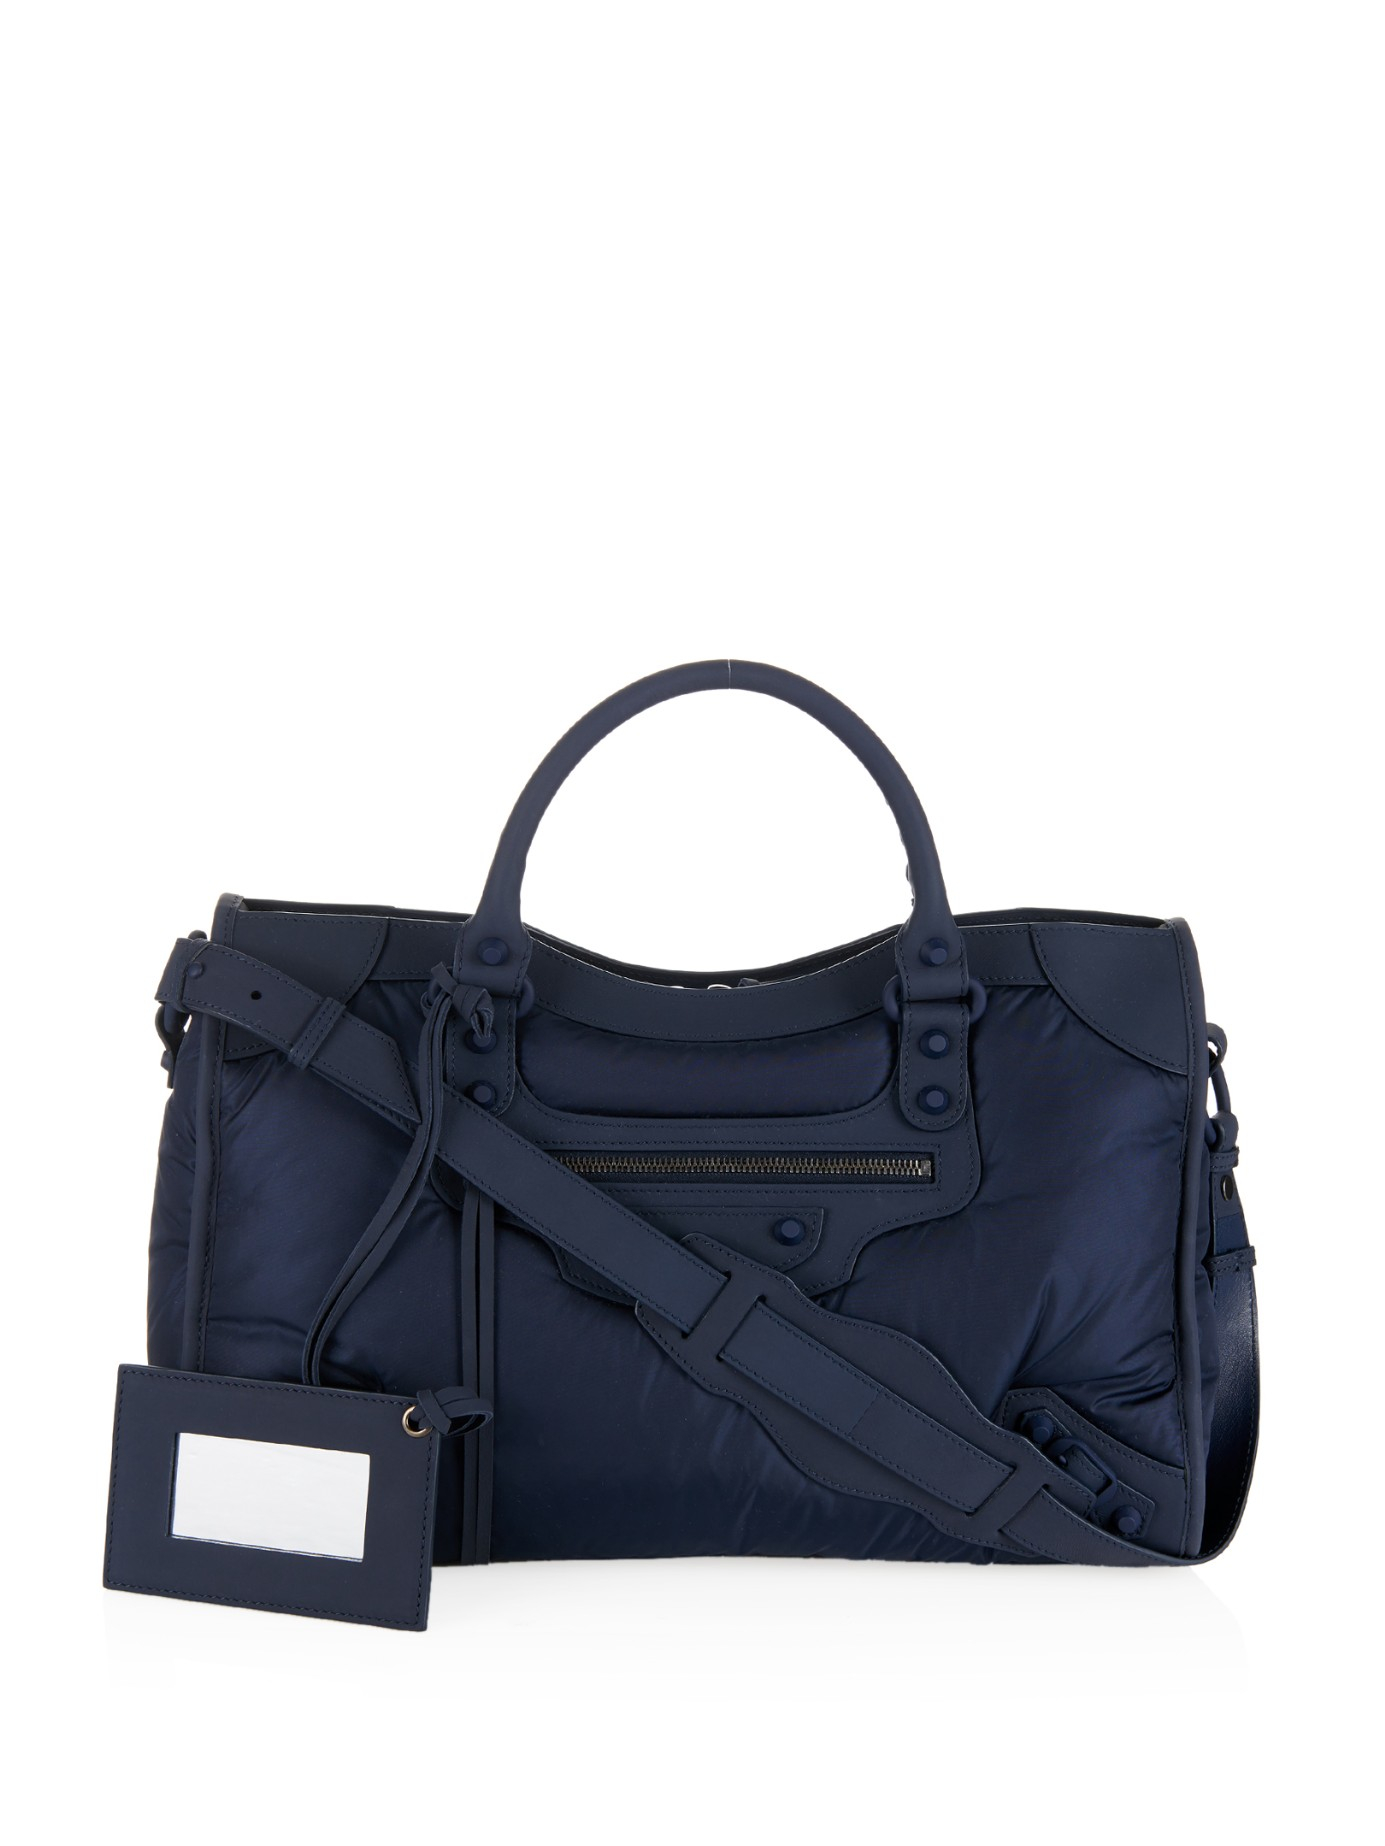 Balenciaga Classic City Nylon Bag in Blue | Lyst